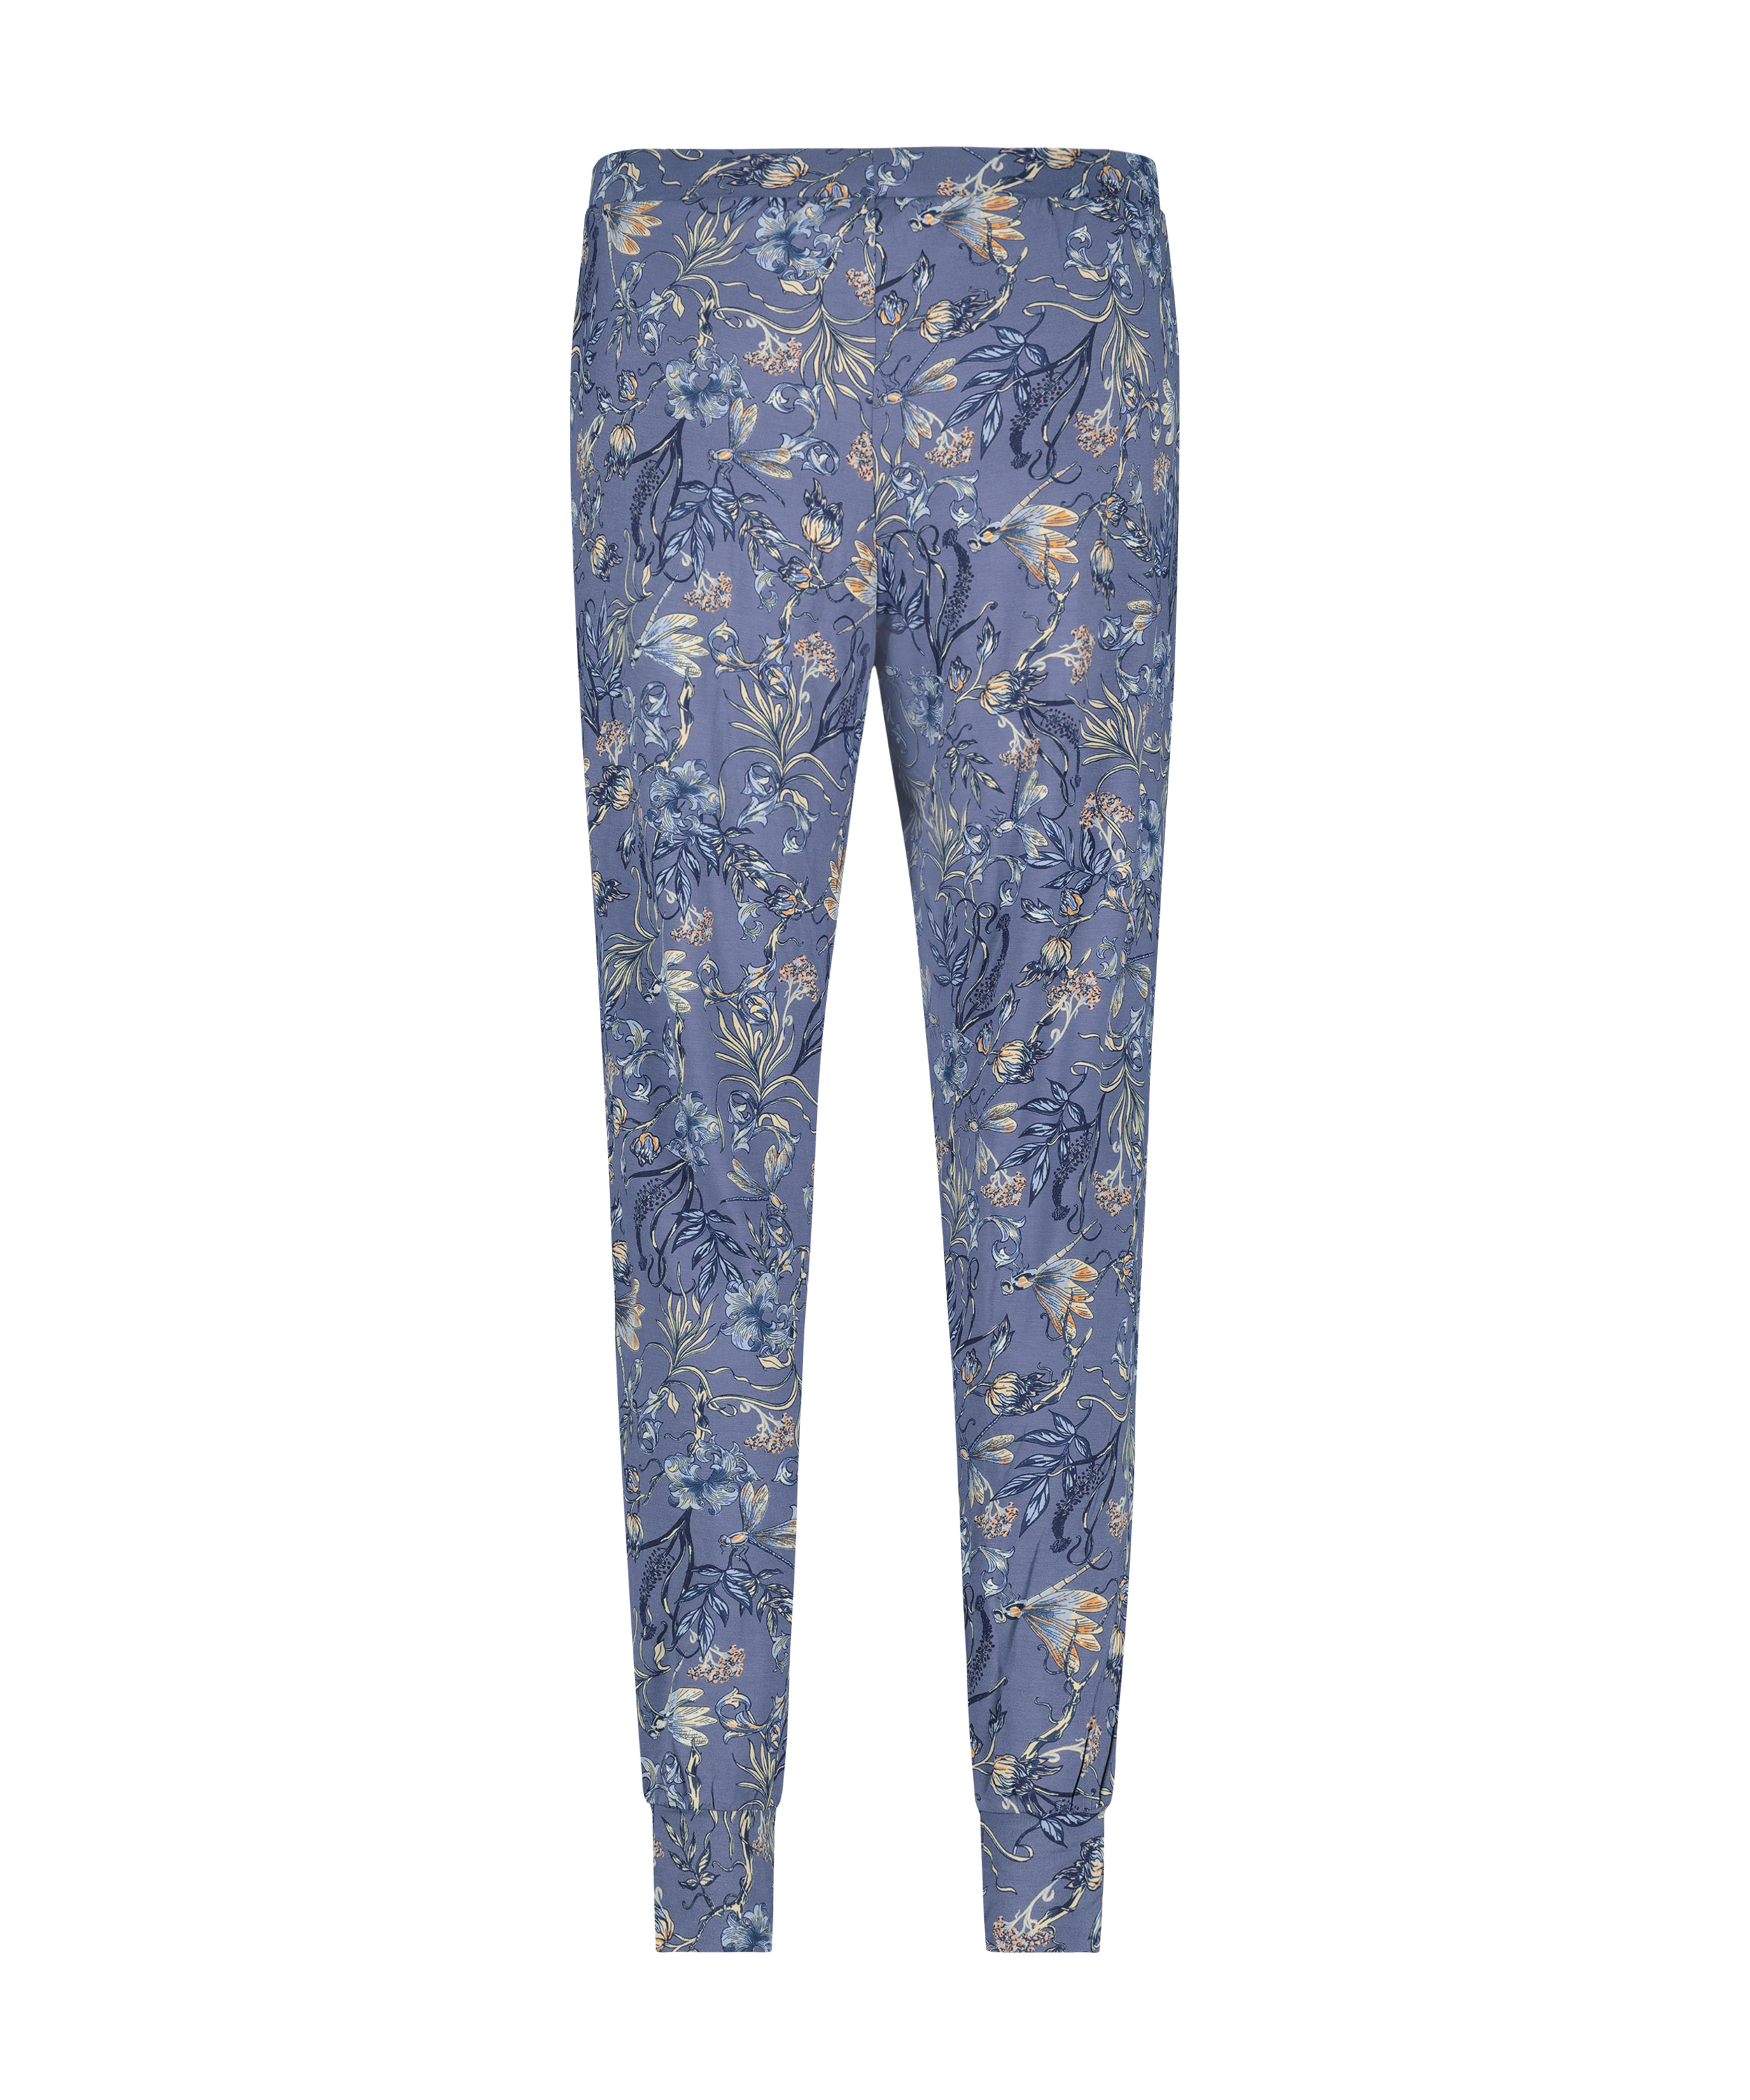 Tall Ditzy Floral pyjamasbukser, blå, main